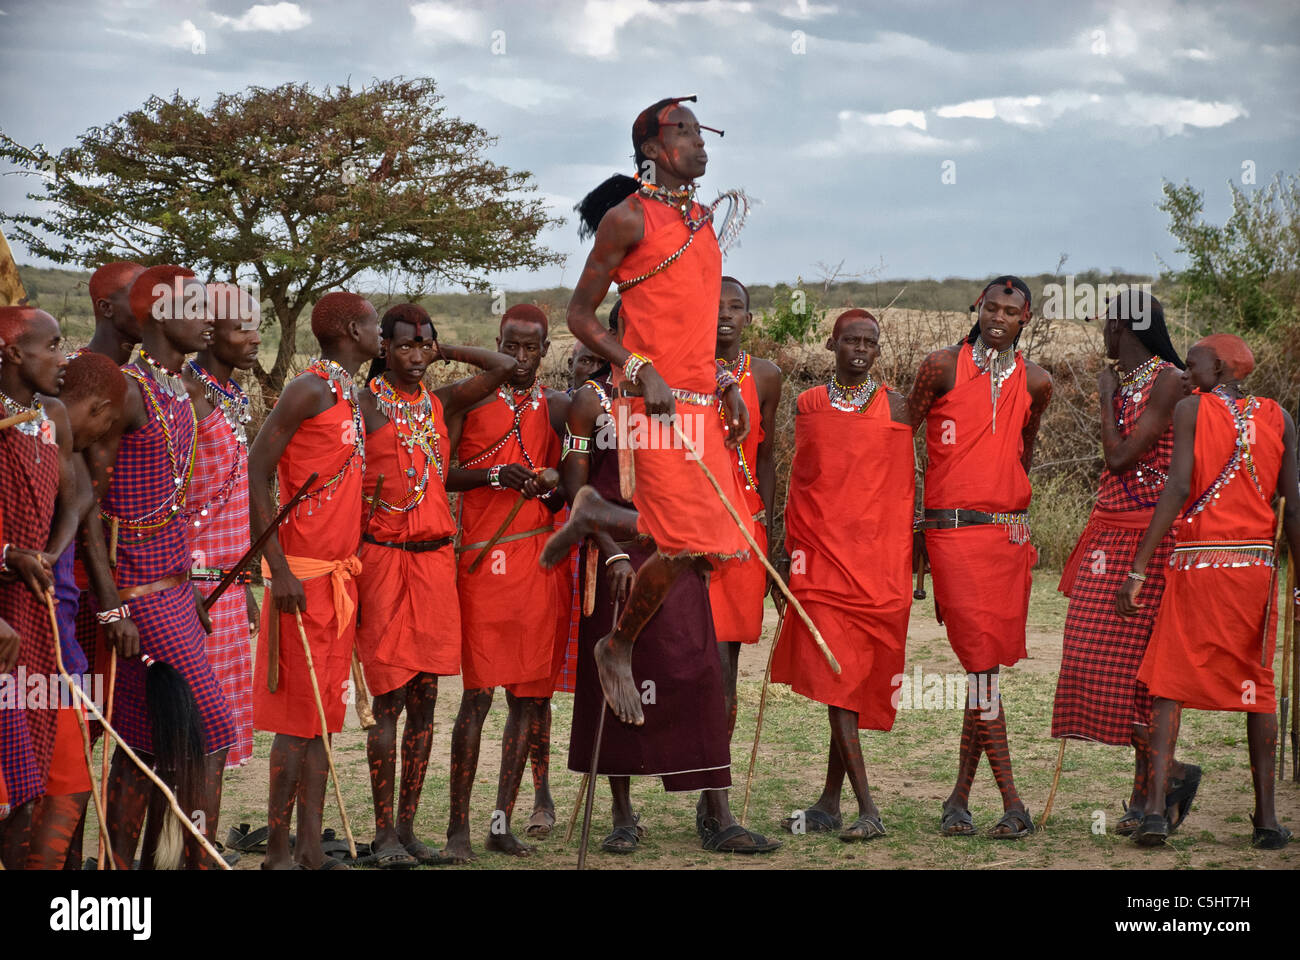 Masai men, doing a jumping dance, wearing traditional dress, in a village in the Masai Mara, Kenya, Africa Stock Photo